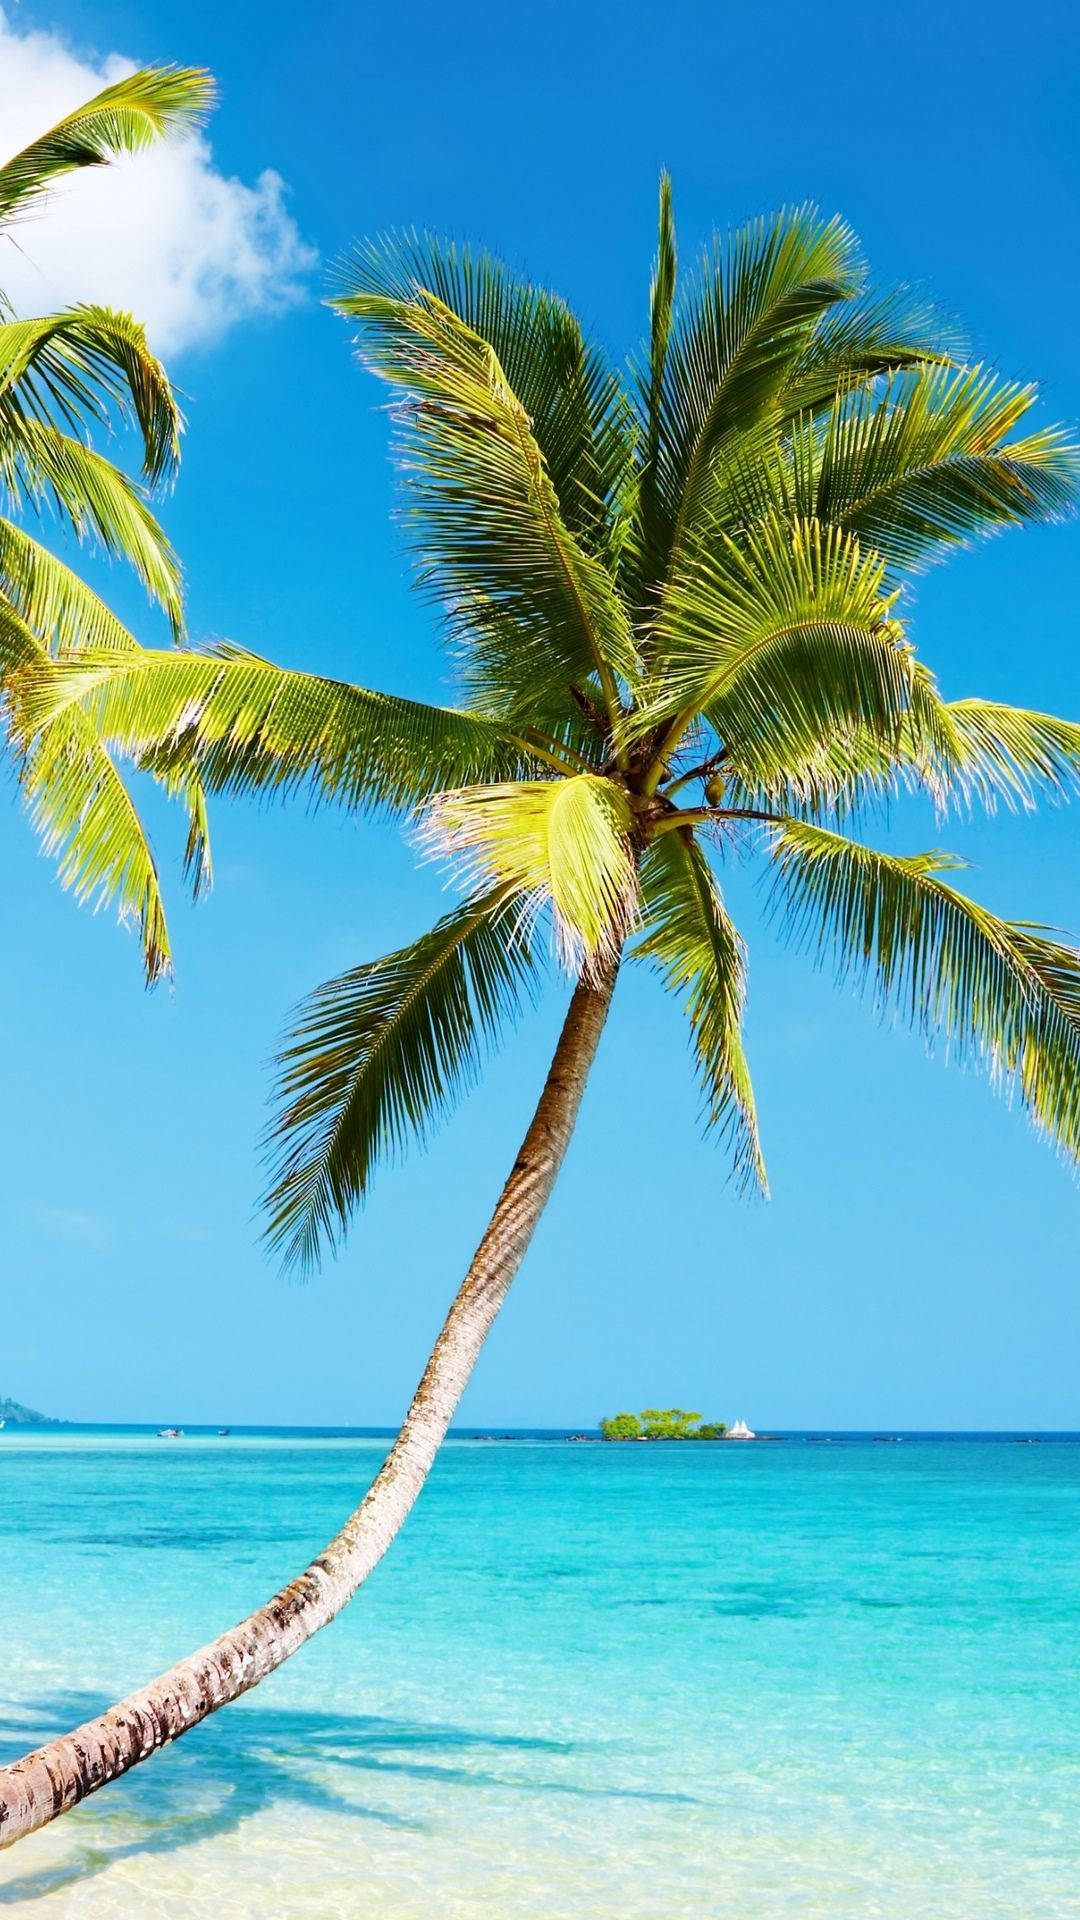 4k Iphone Bent Coconut Tree On Beach Background